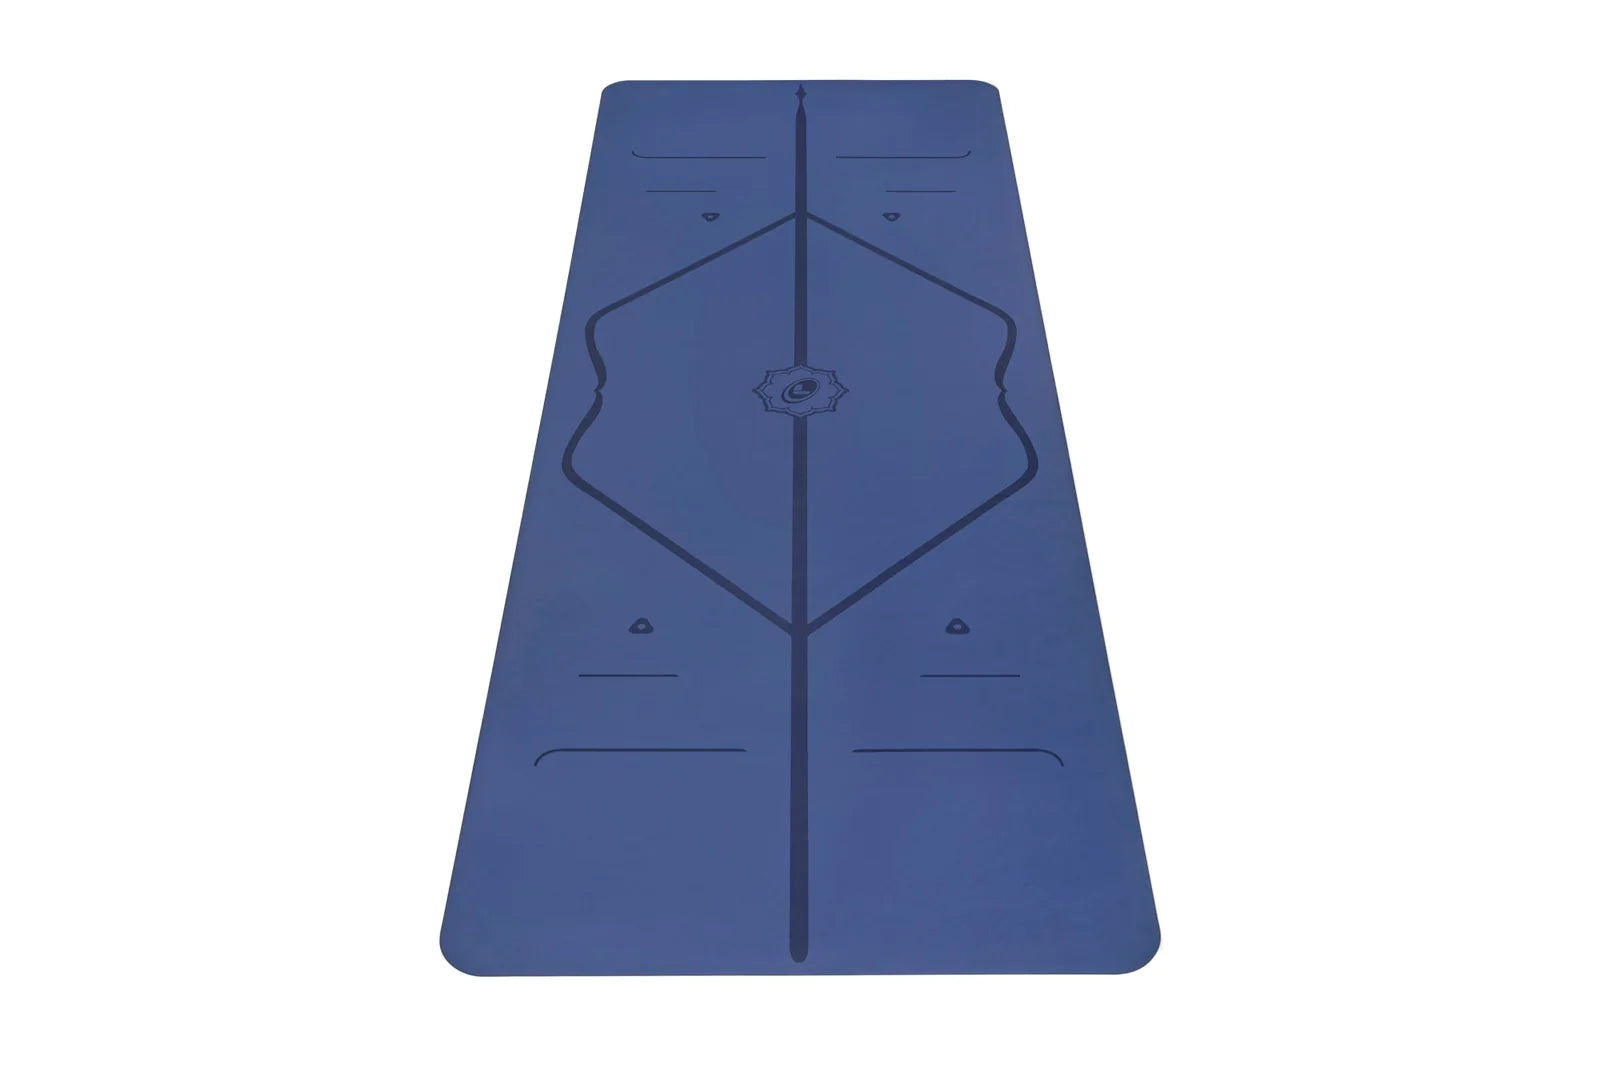 Liforme Yoga Mat - Dusk Blue – Key Power Sports Singapore